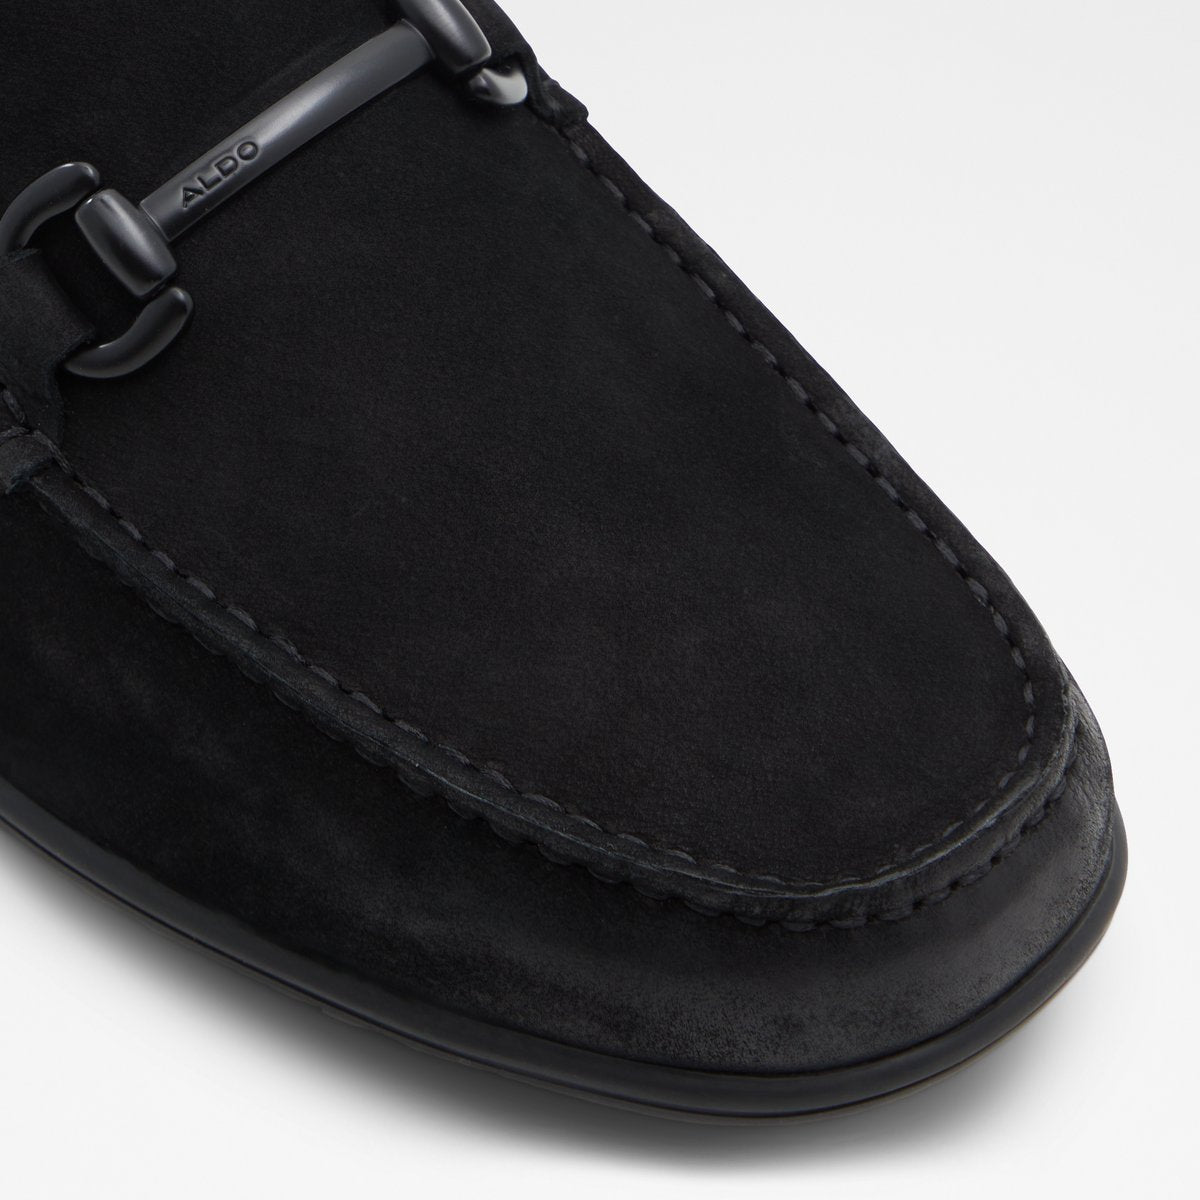 Evoke / Slip Ons Men Shoes - Black - ALDO KSA